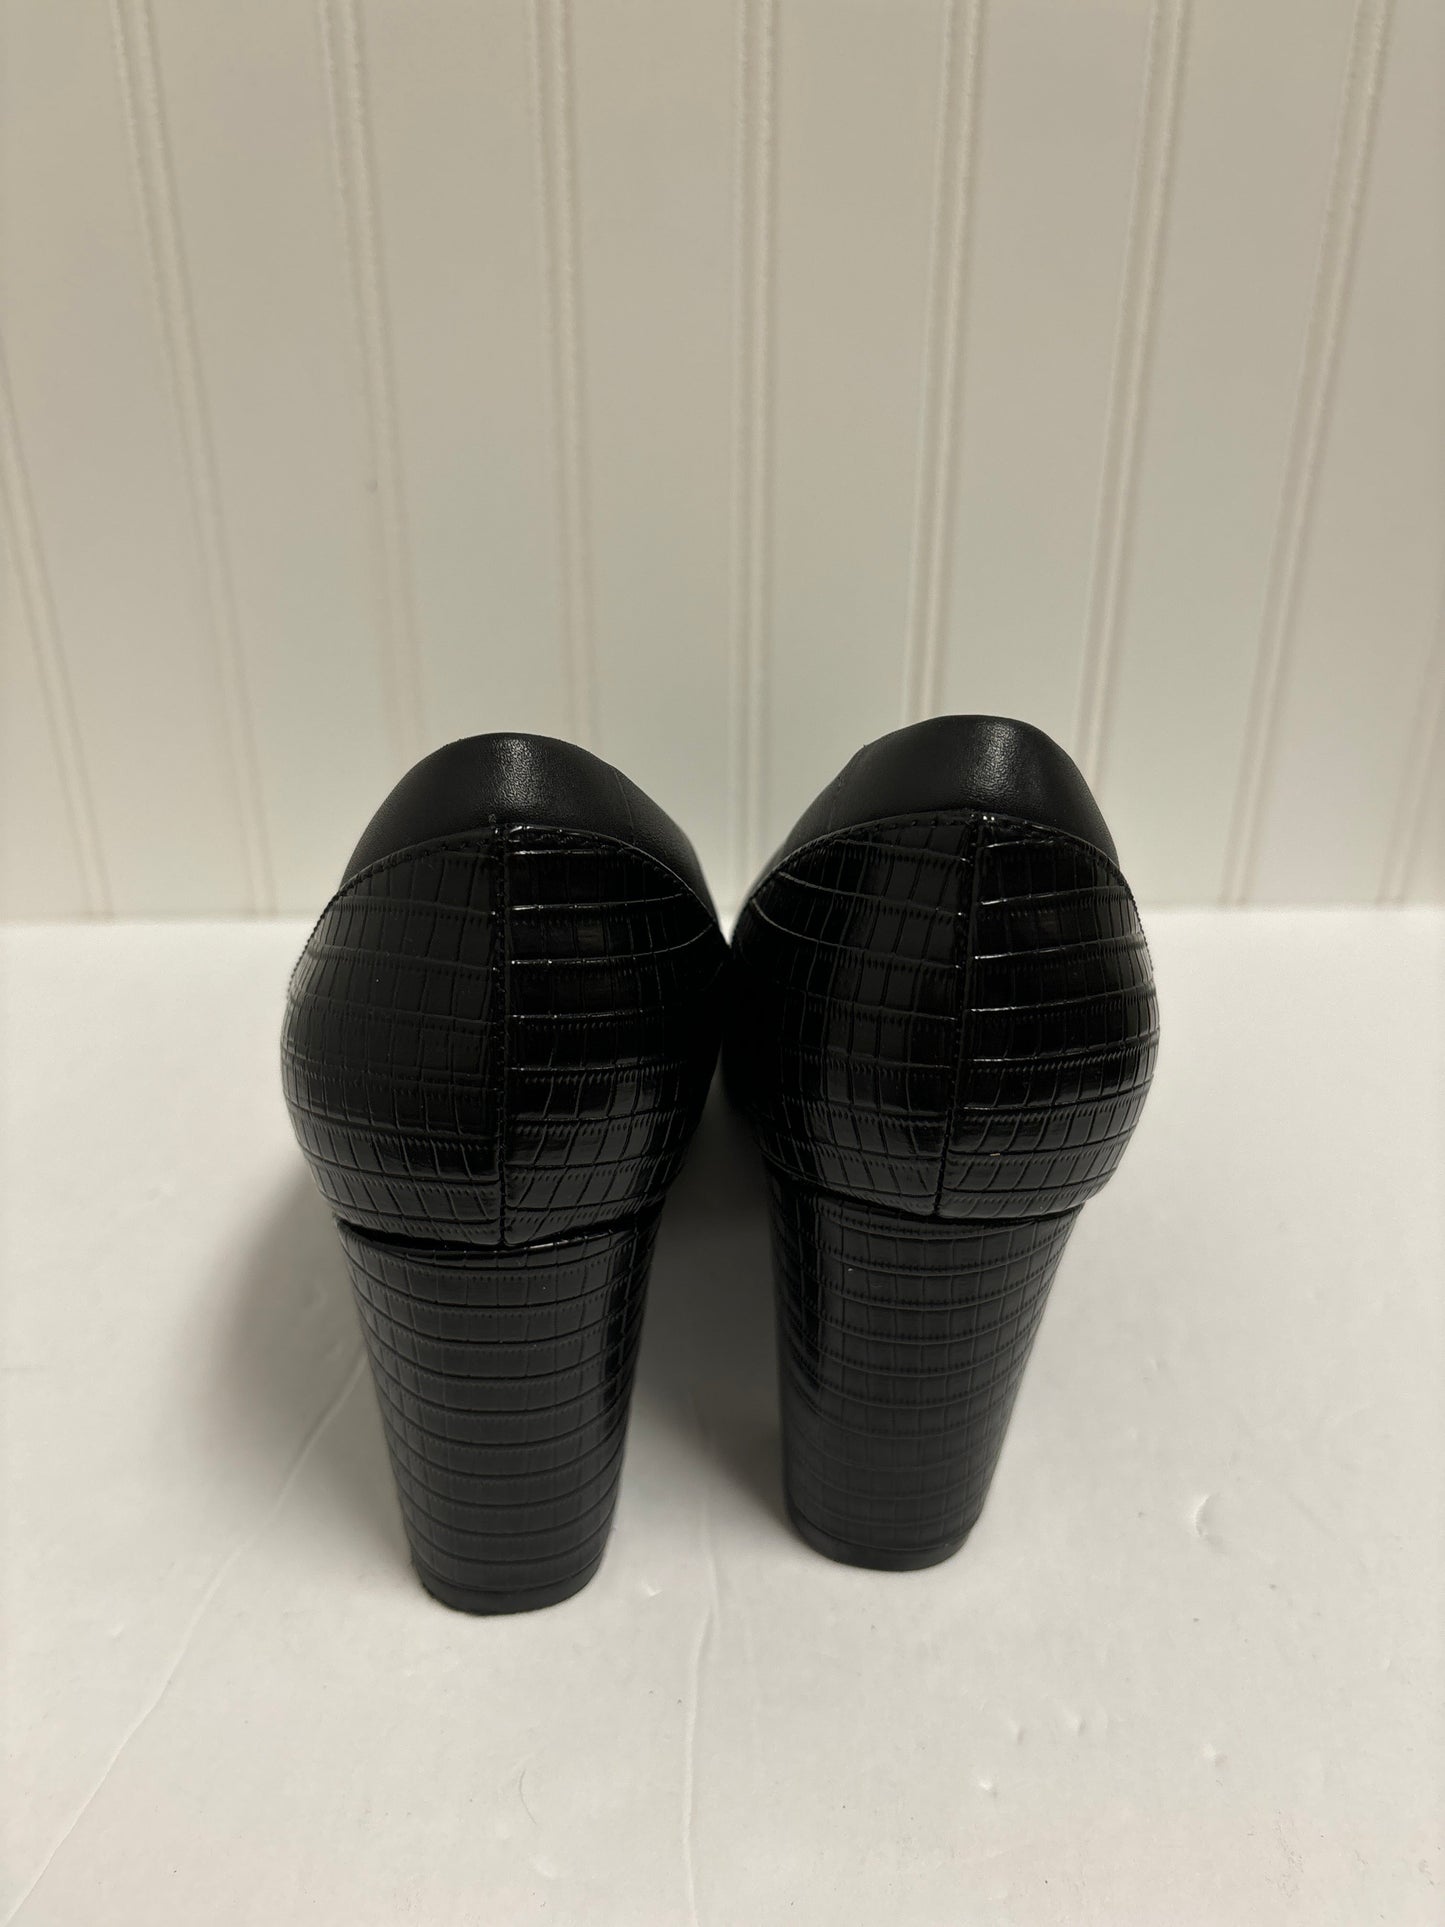 Black Shoes Heels Block Clarks, Size 8.5